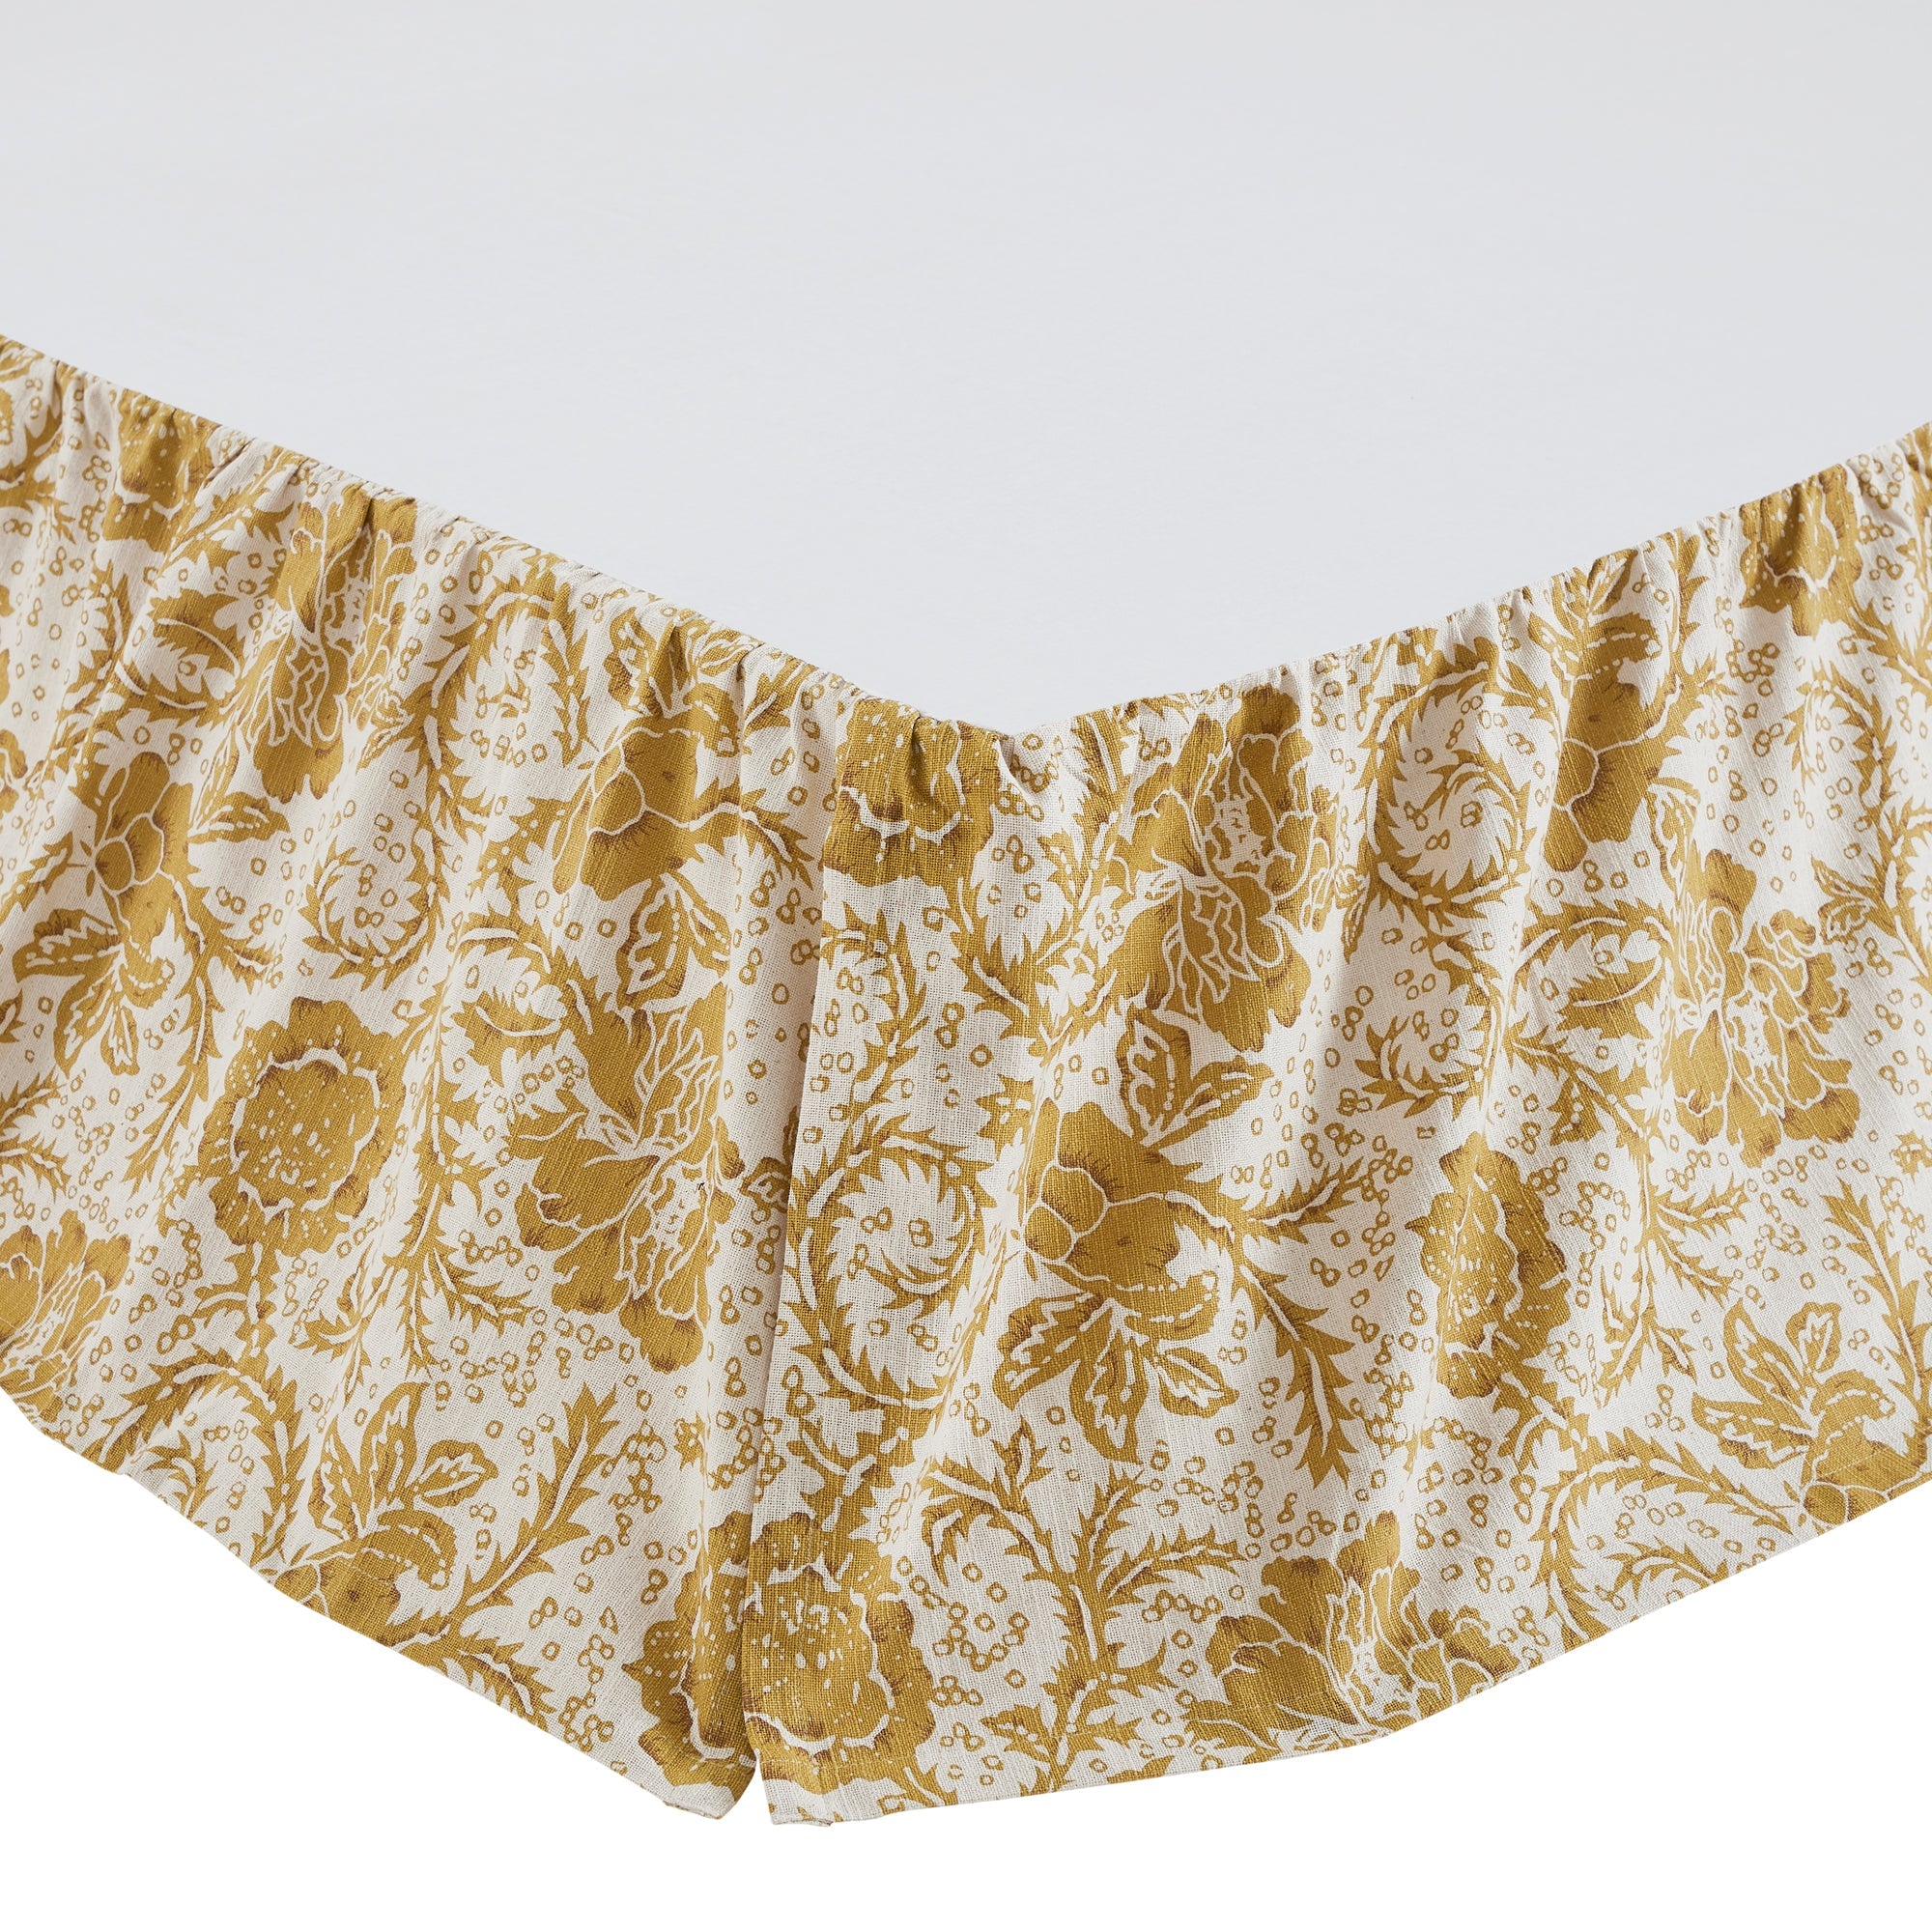 Dorset Gold Floral King Bed Skirt 78x80x16 VHC Brands